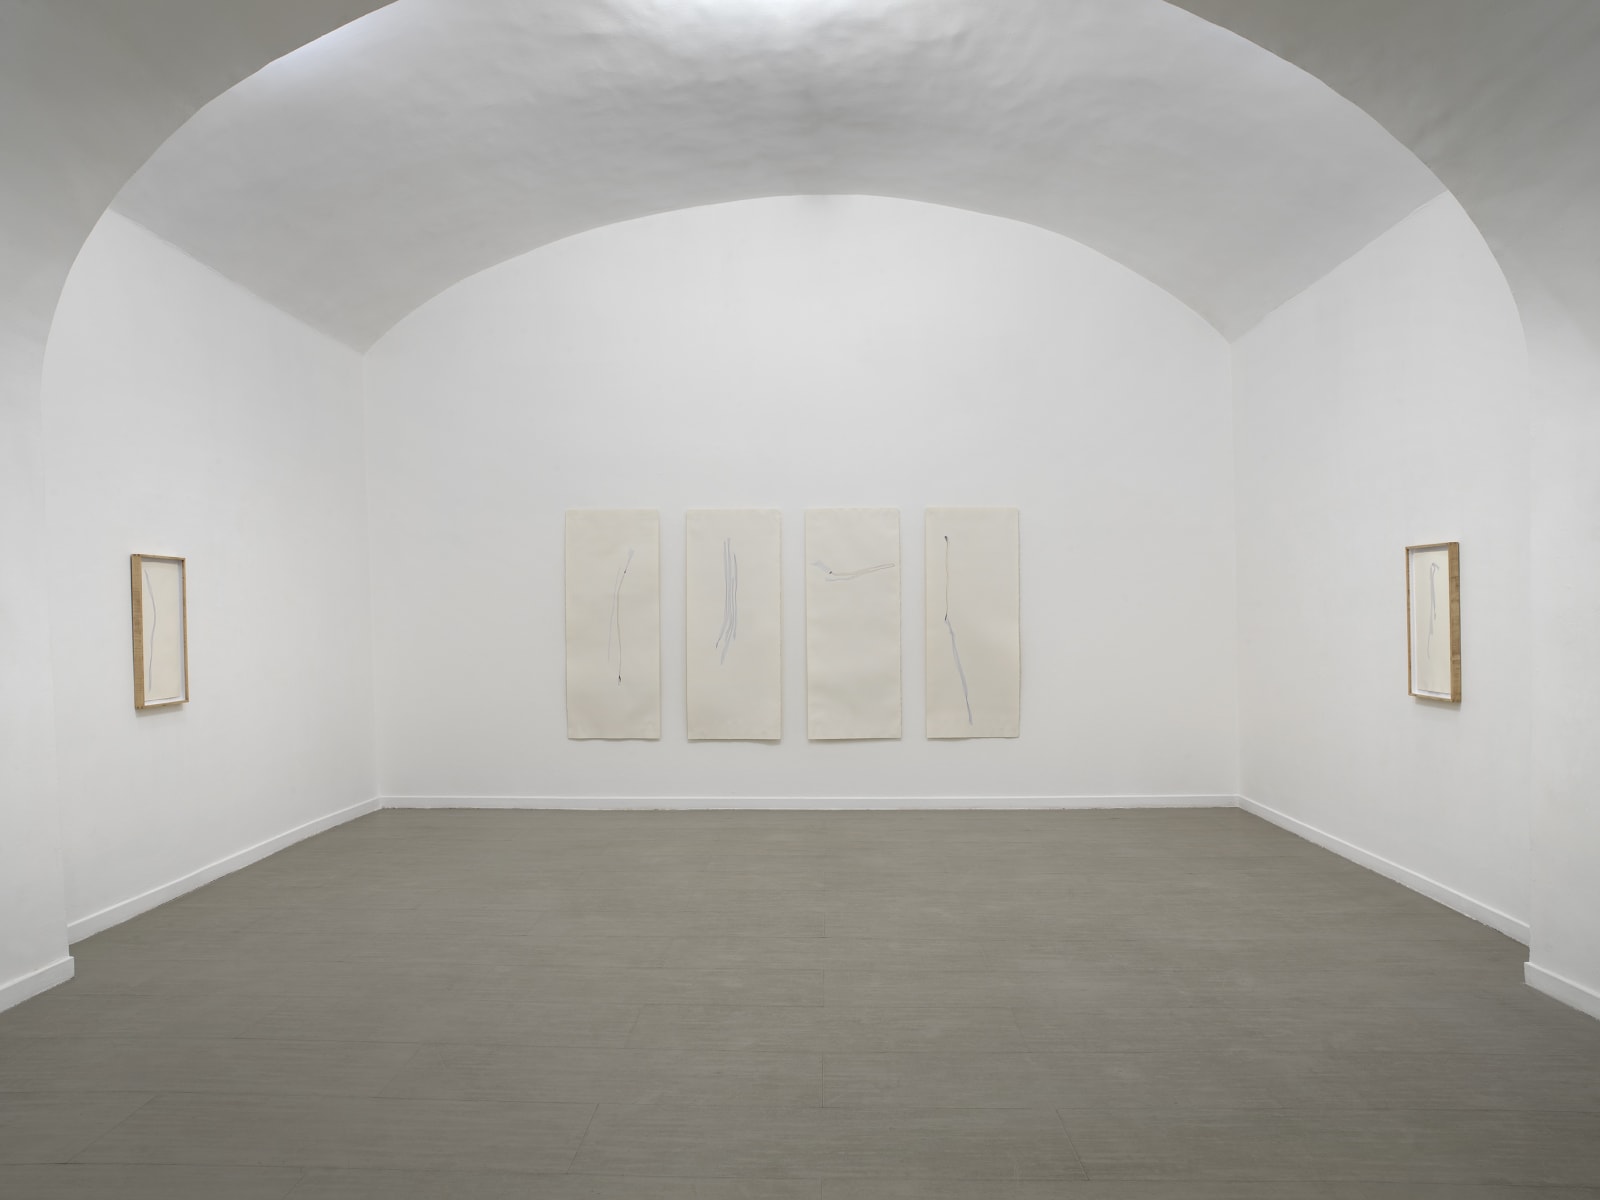 Beatrice Pediconi Nude curated by Cecilia Canziani installation view of the third room ph. Dario Lasagni